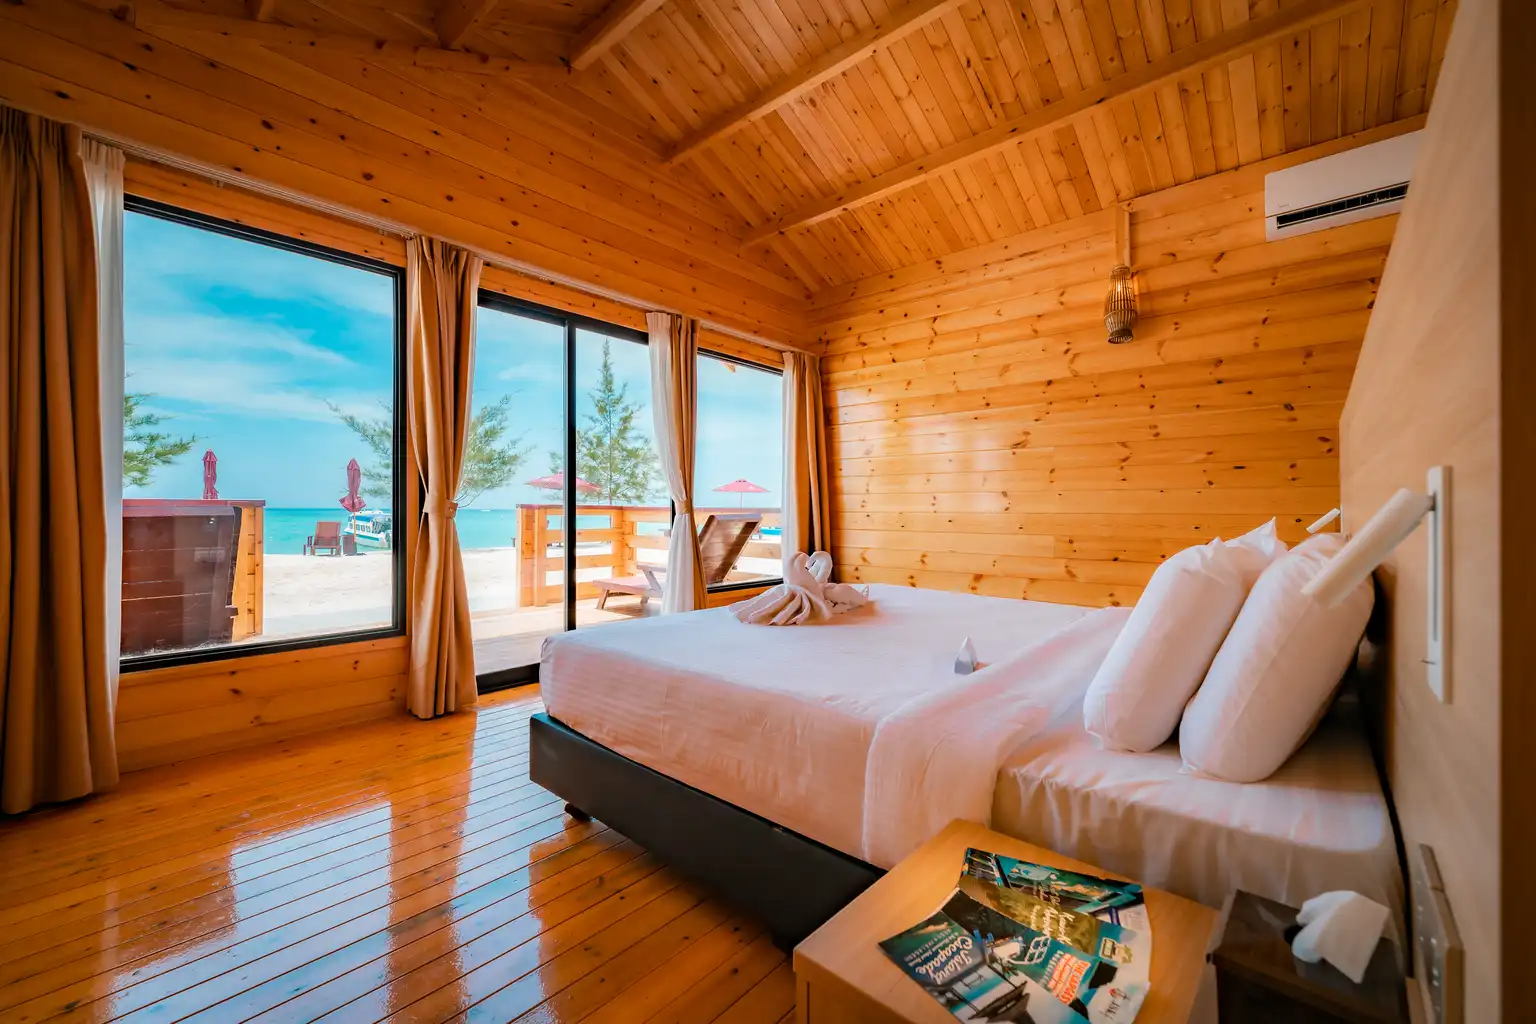 Beachfront premium villa interior with a large bed facing the ocean through floor-to-ceiling windows.